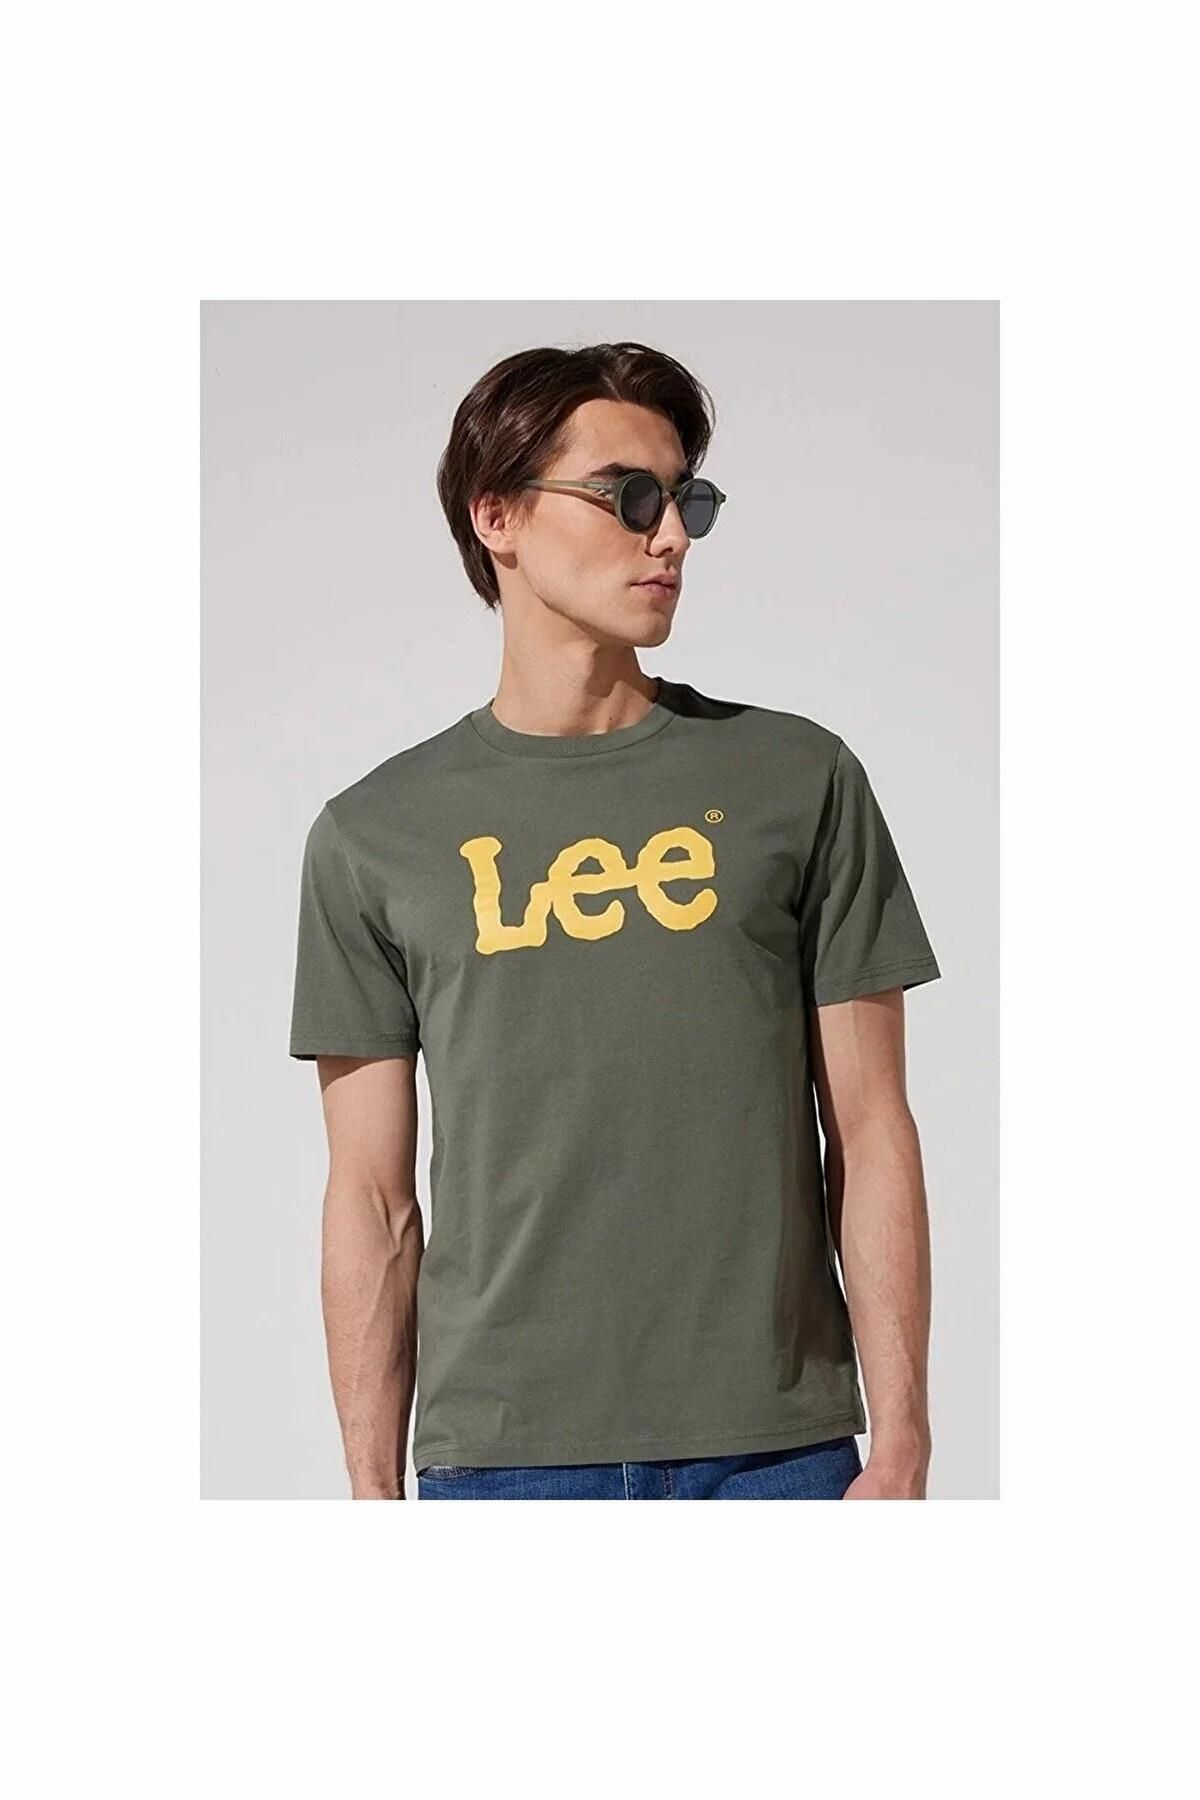 Lee Logo Erkek Tişört L65qaı801